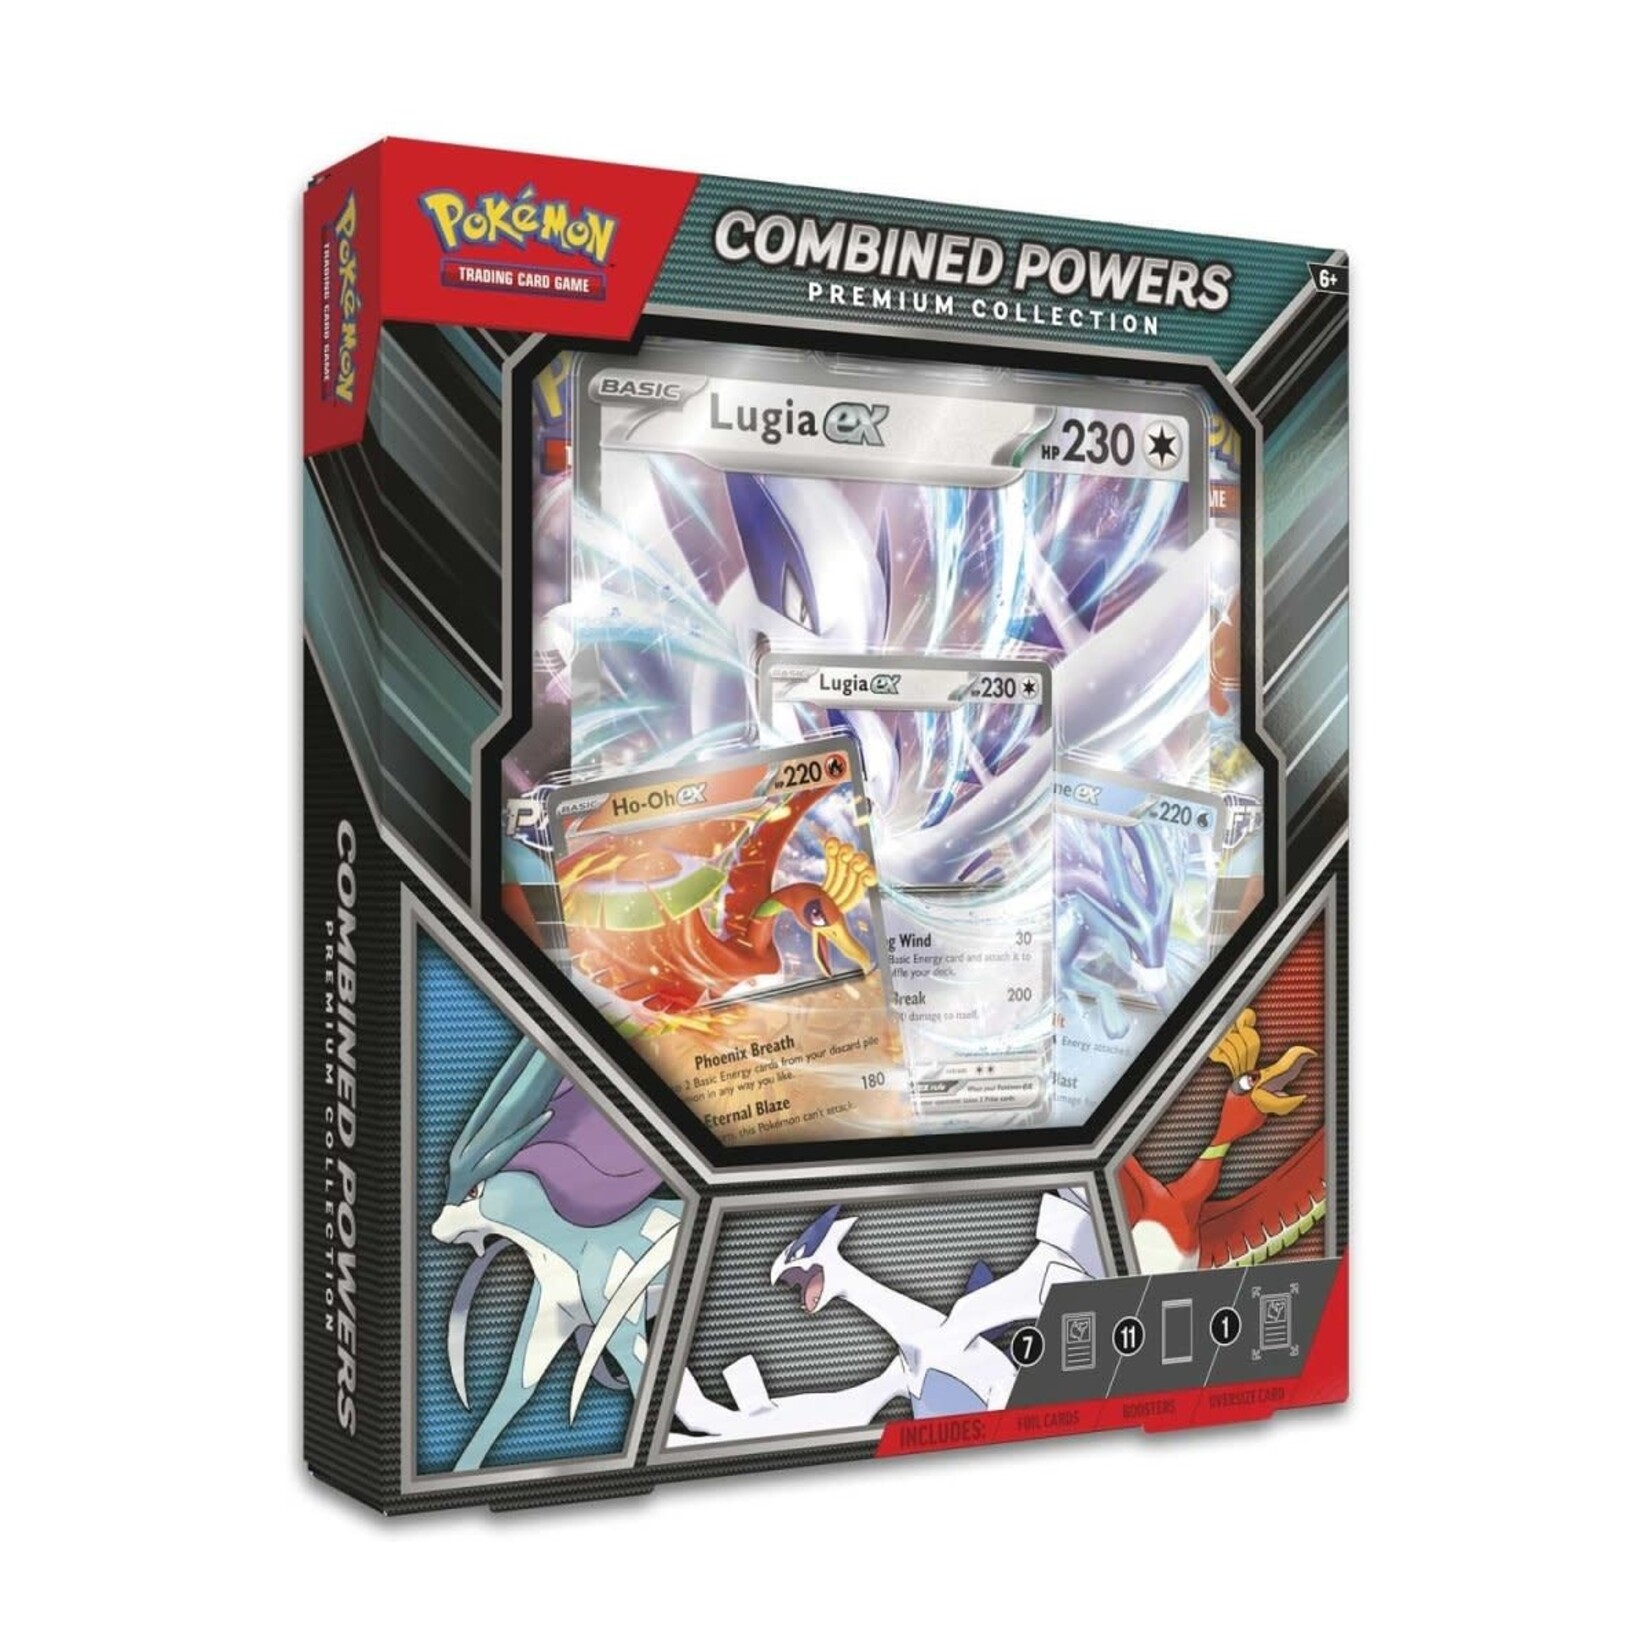 Pokémon Pokemon Combined Powers Collection